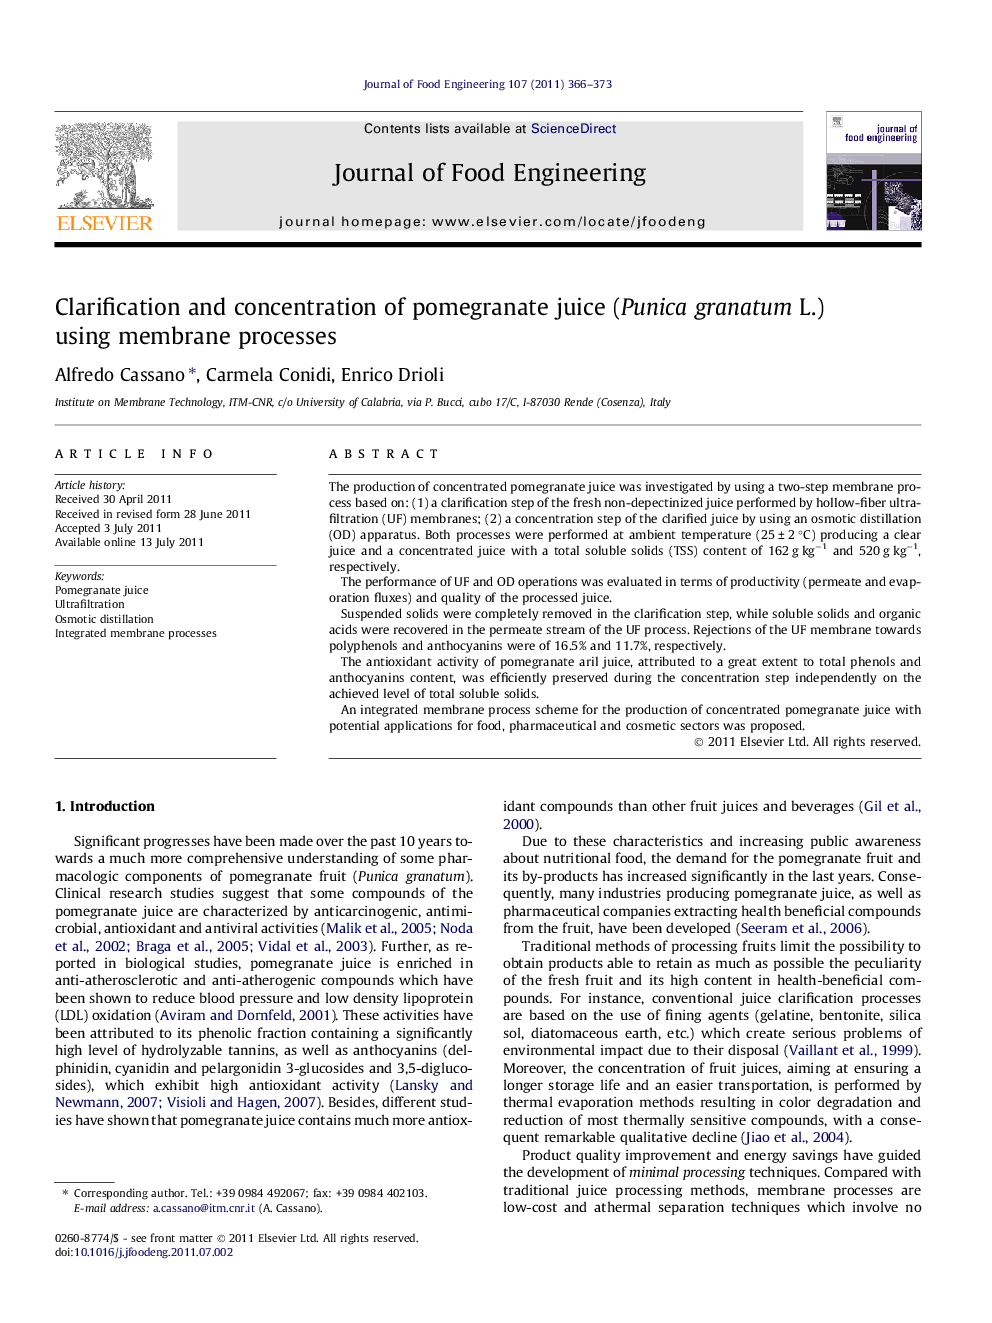 Clarification and concentration of pomegranate juice (Punica granatum L.) using membrane processes